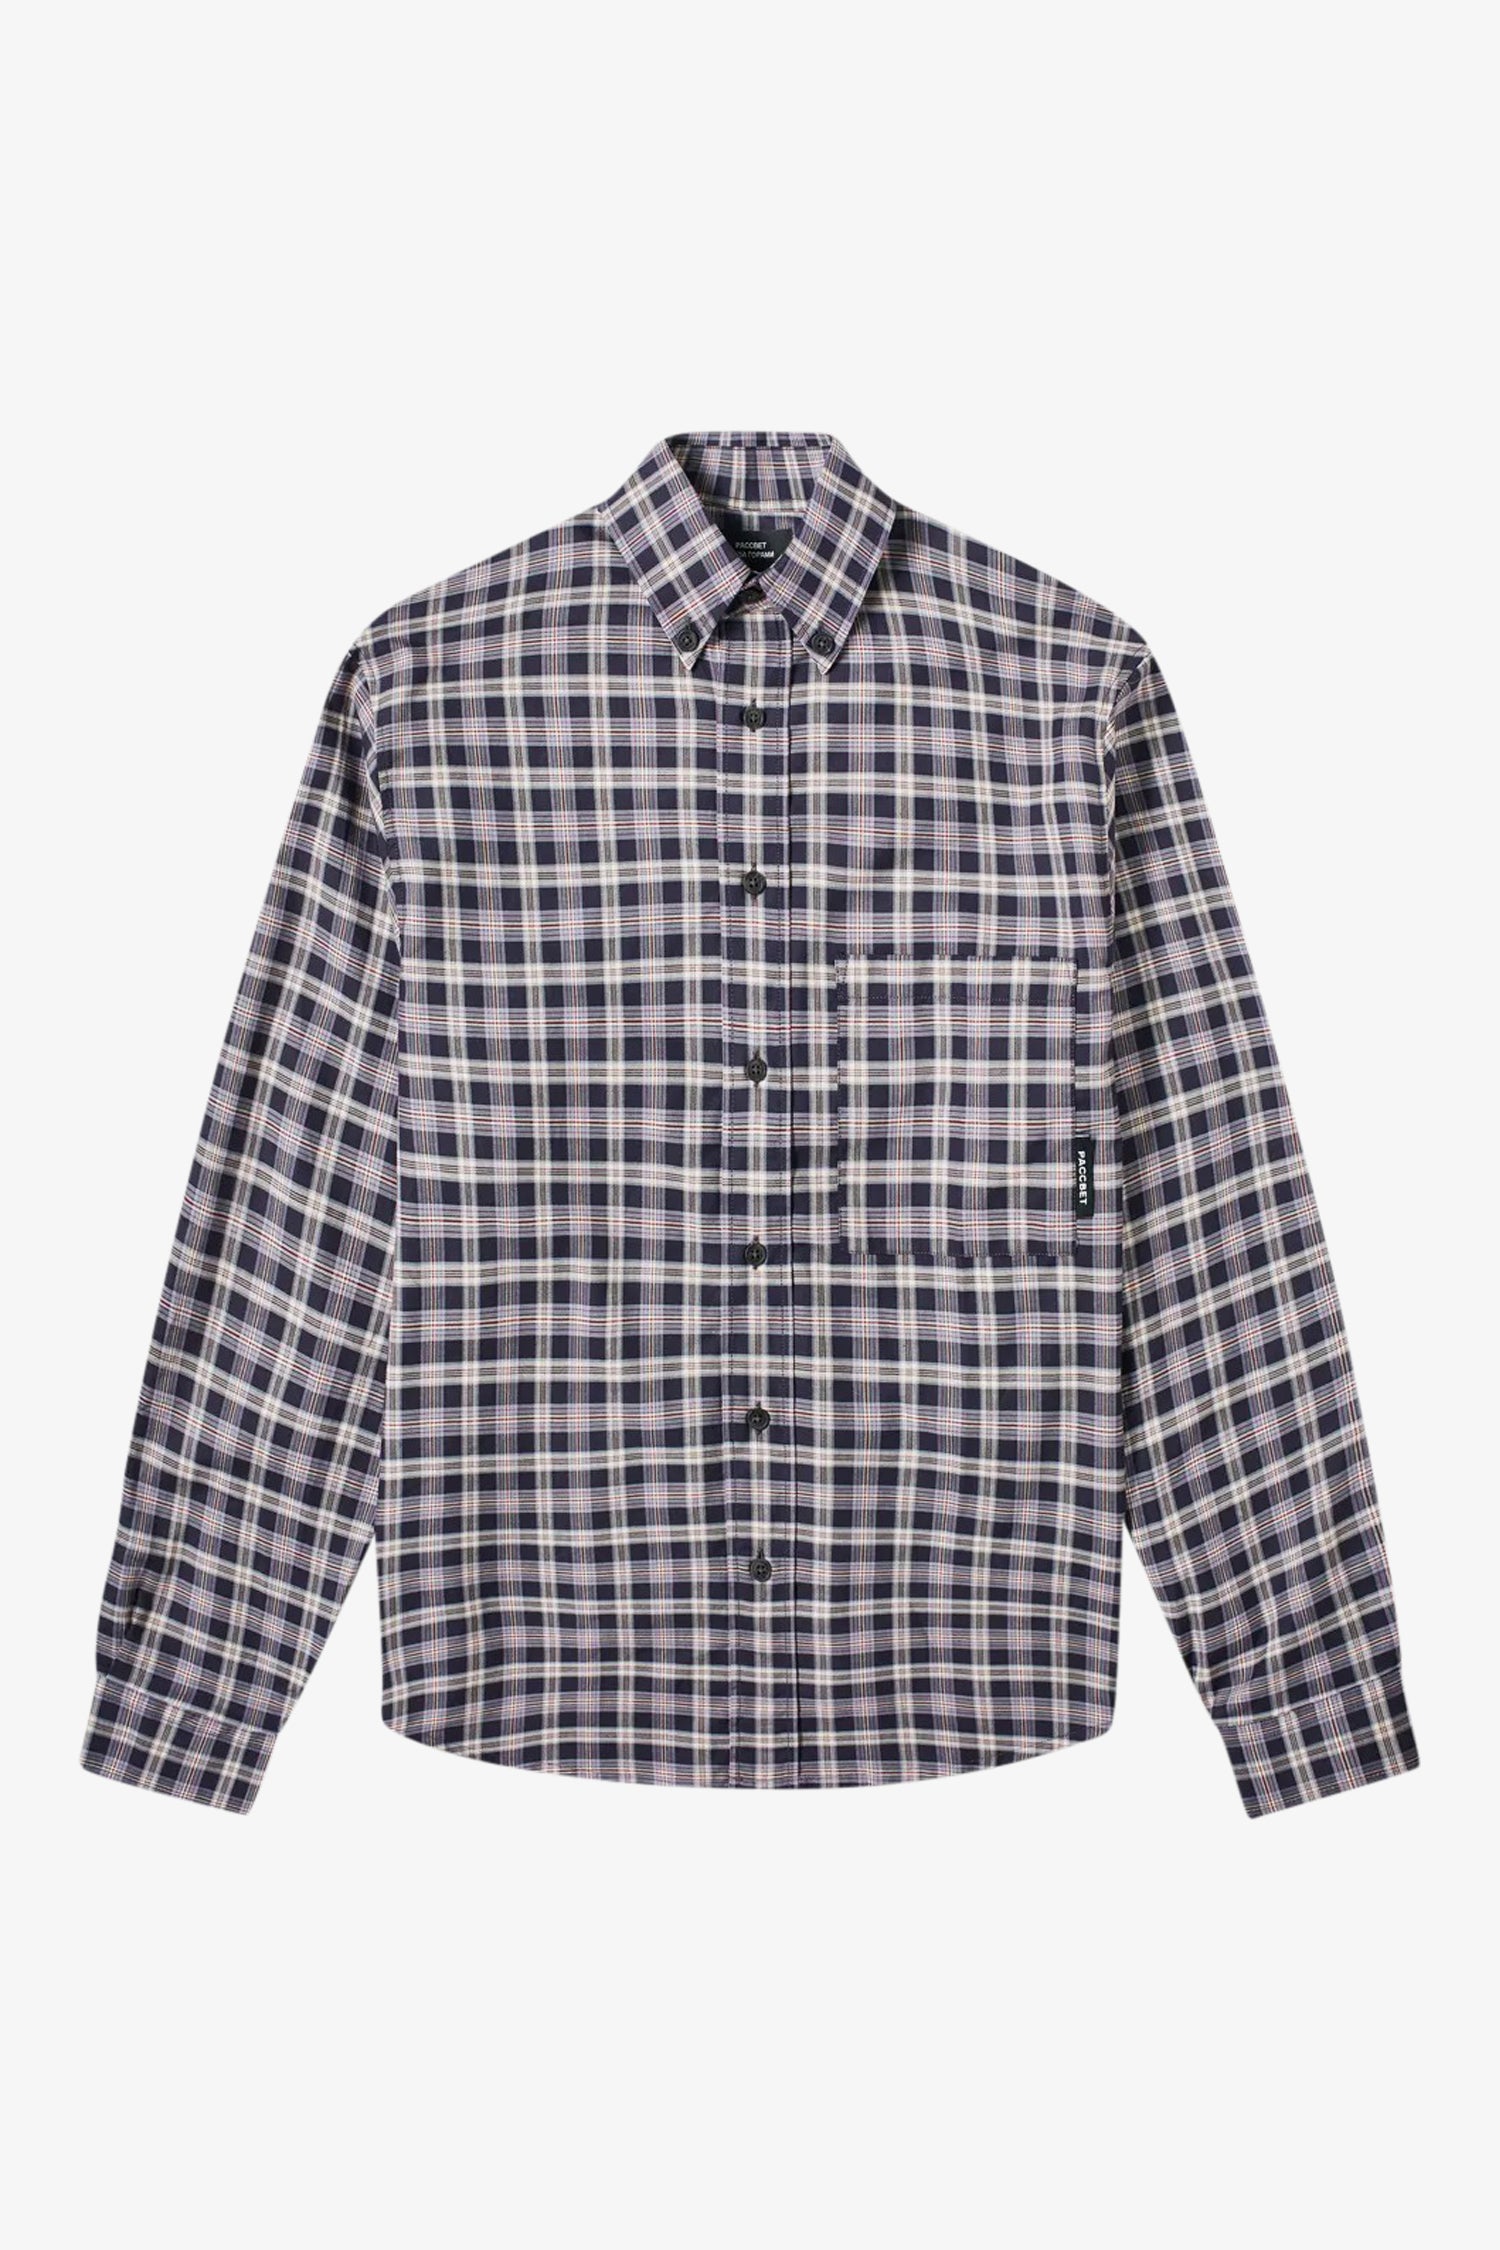 Selectshop FRAME - RASSVET Mixed Check Shirt Shirt Dubai